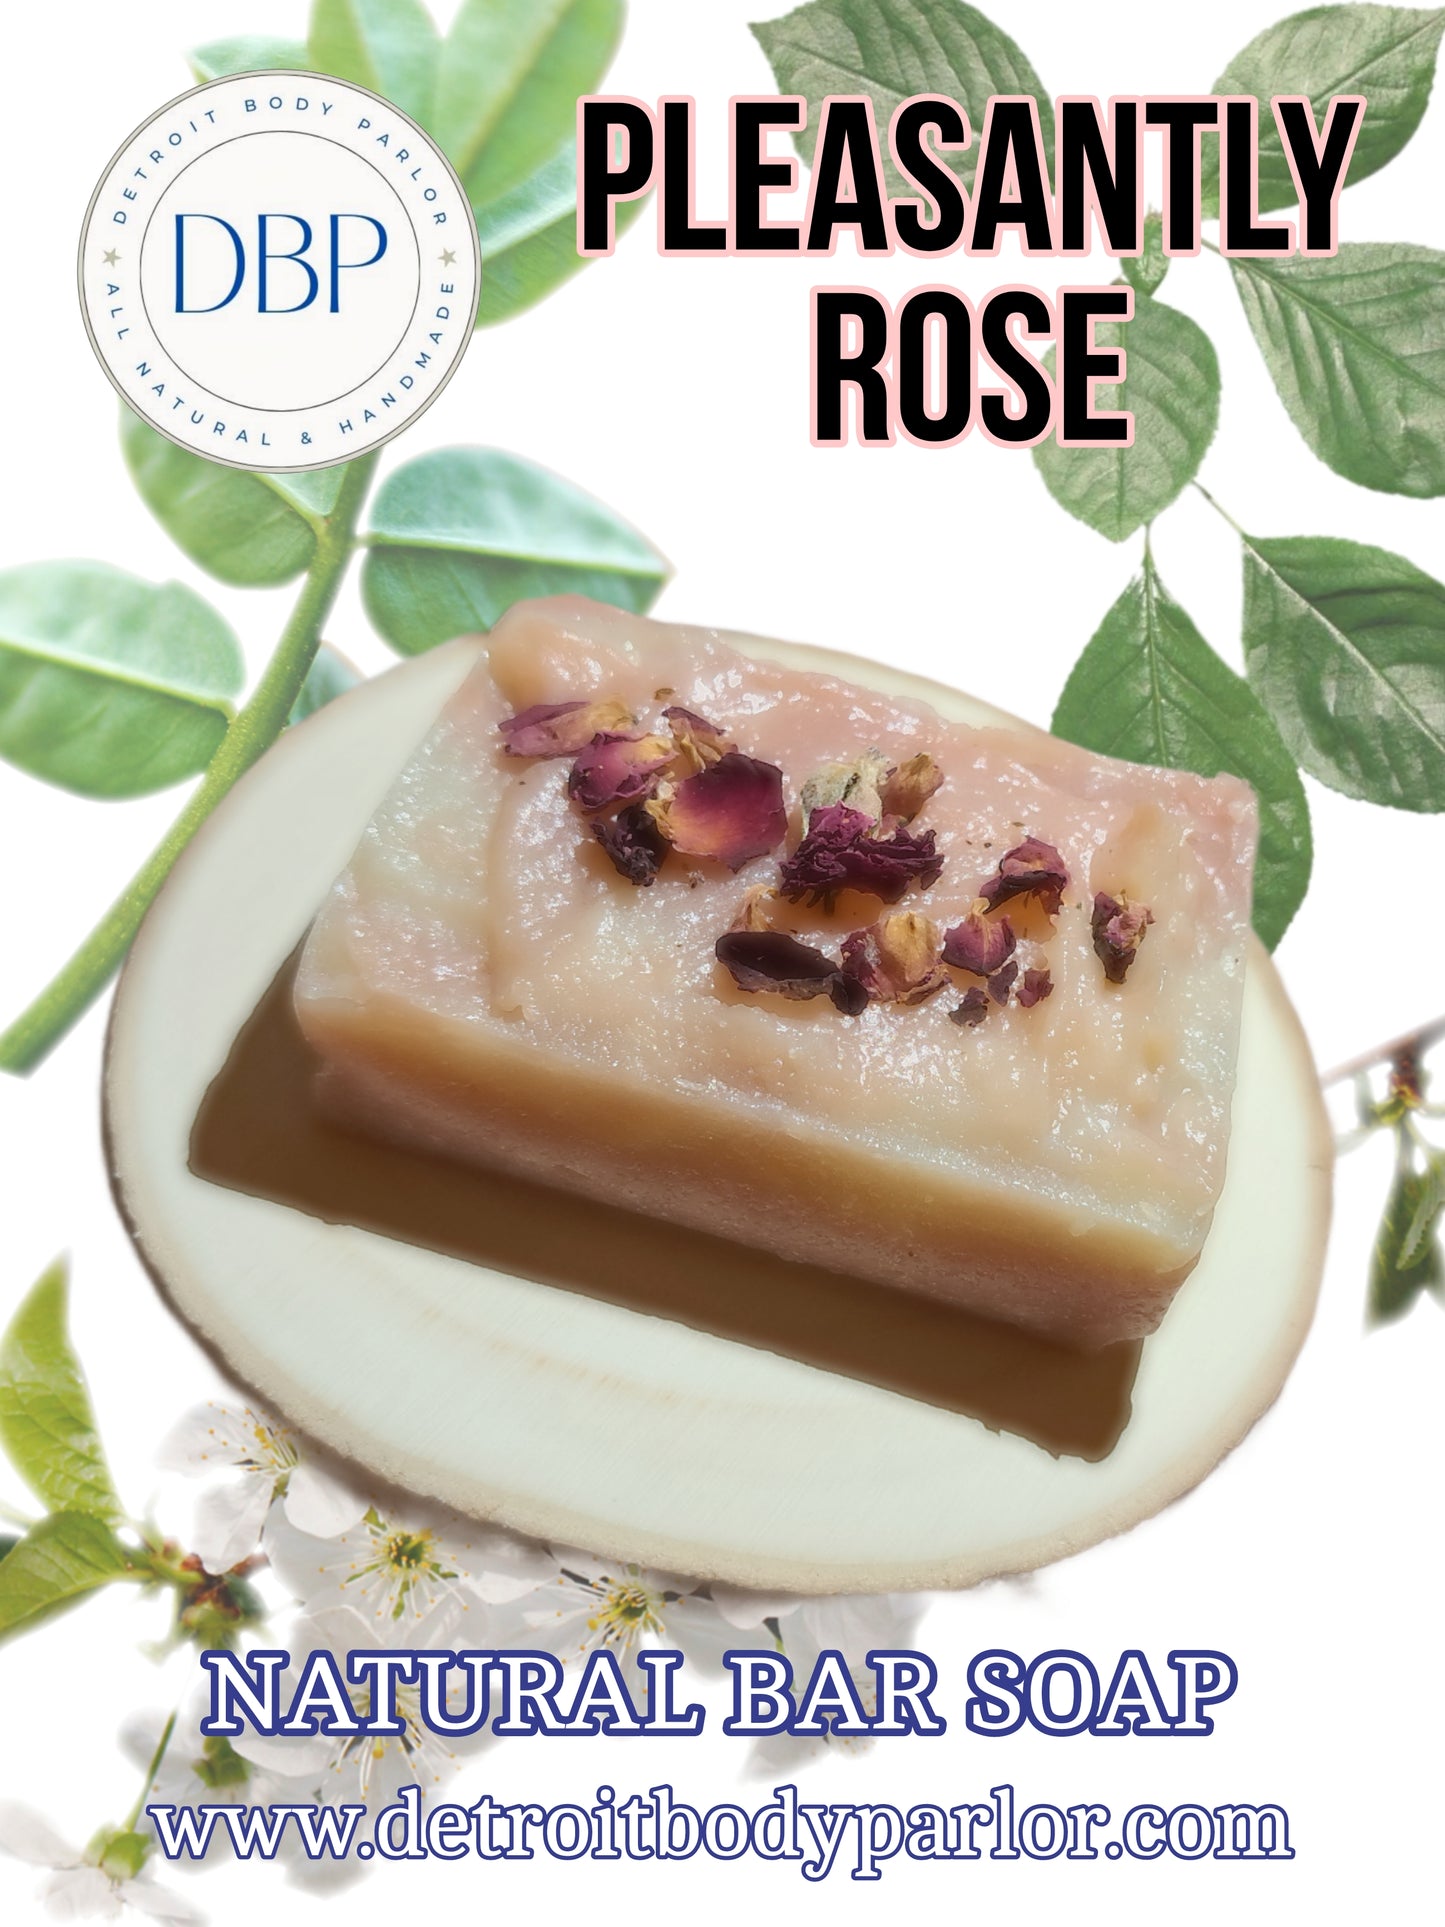 Pleasantly Rose Natural Soap Bar